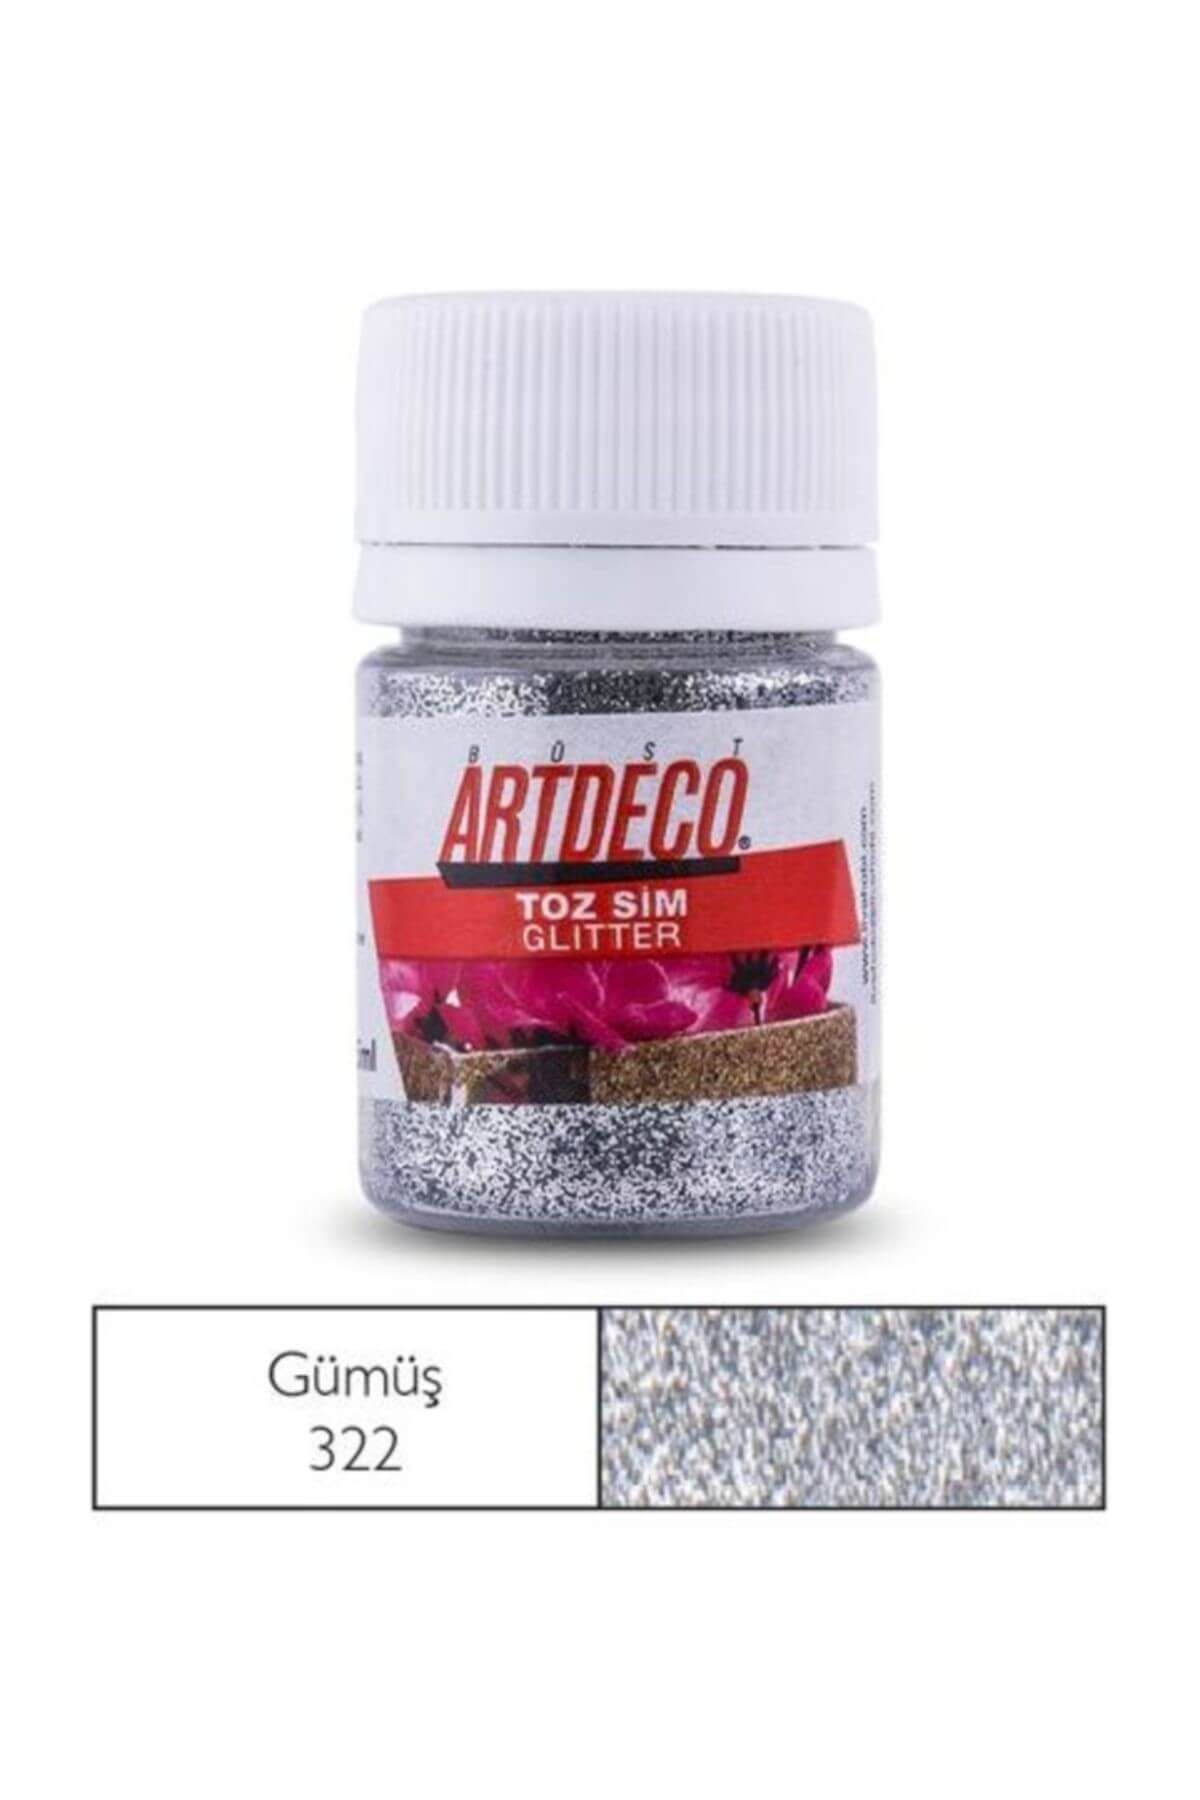 Artdeco Toz Sim (Glitter) 322 Gümüş